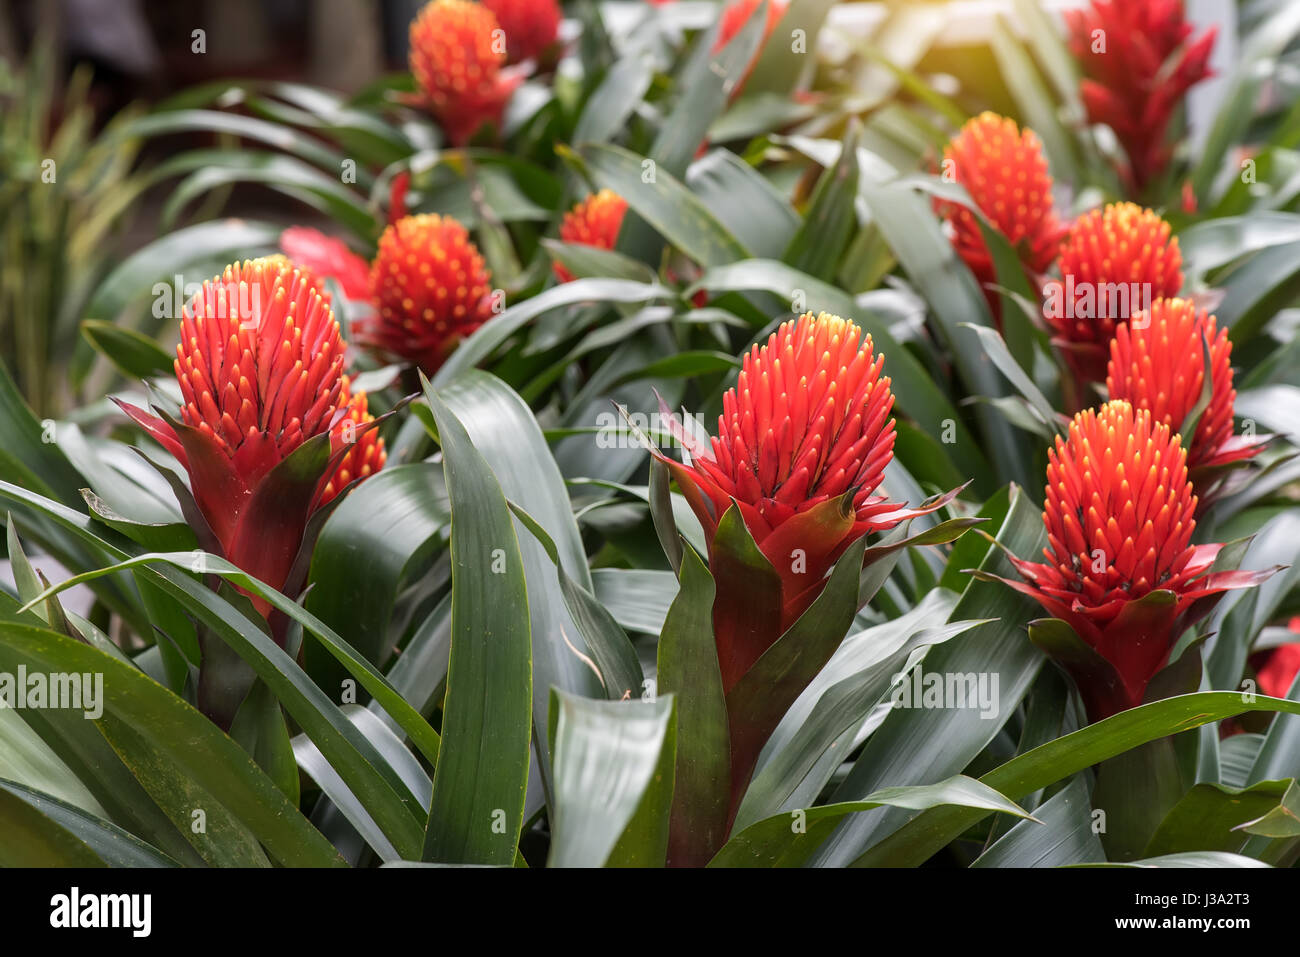 red color of Guzmania flower in garden Stock Photo